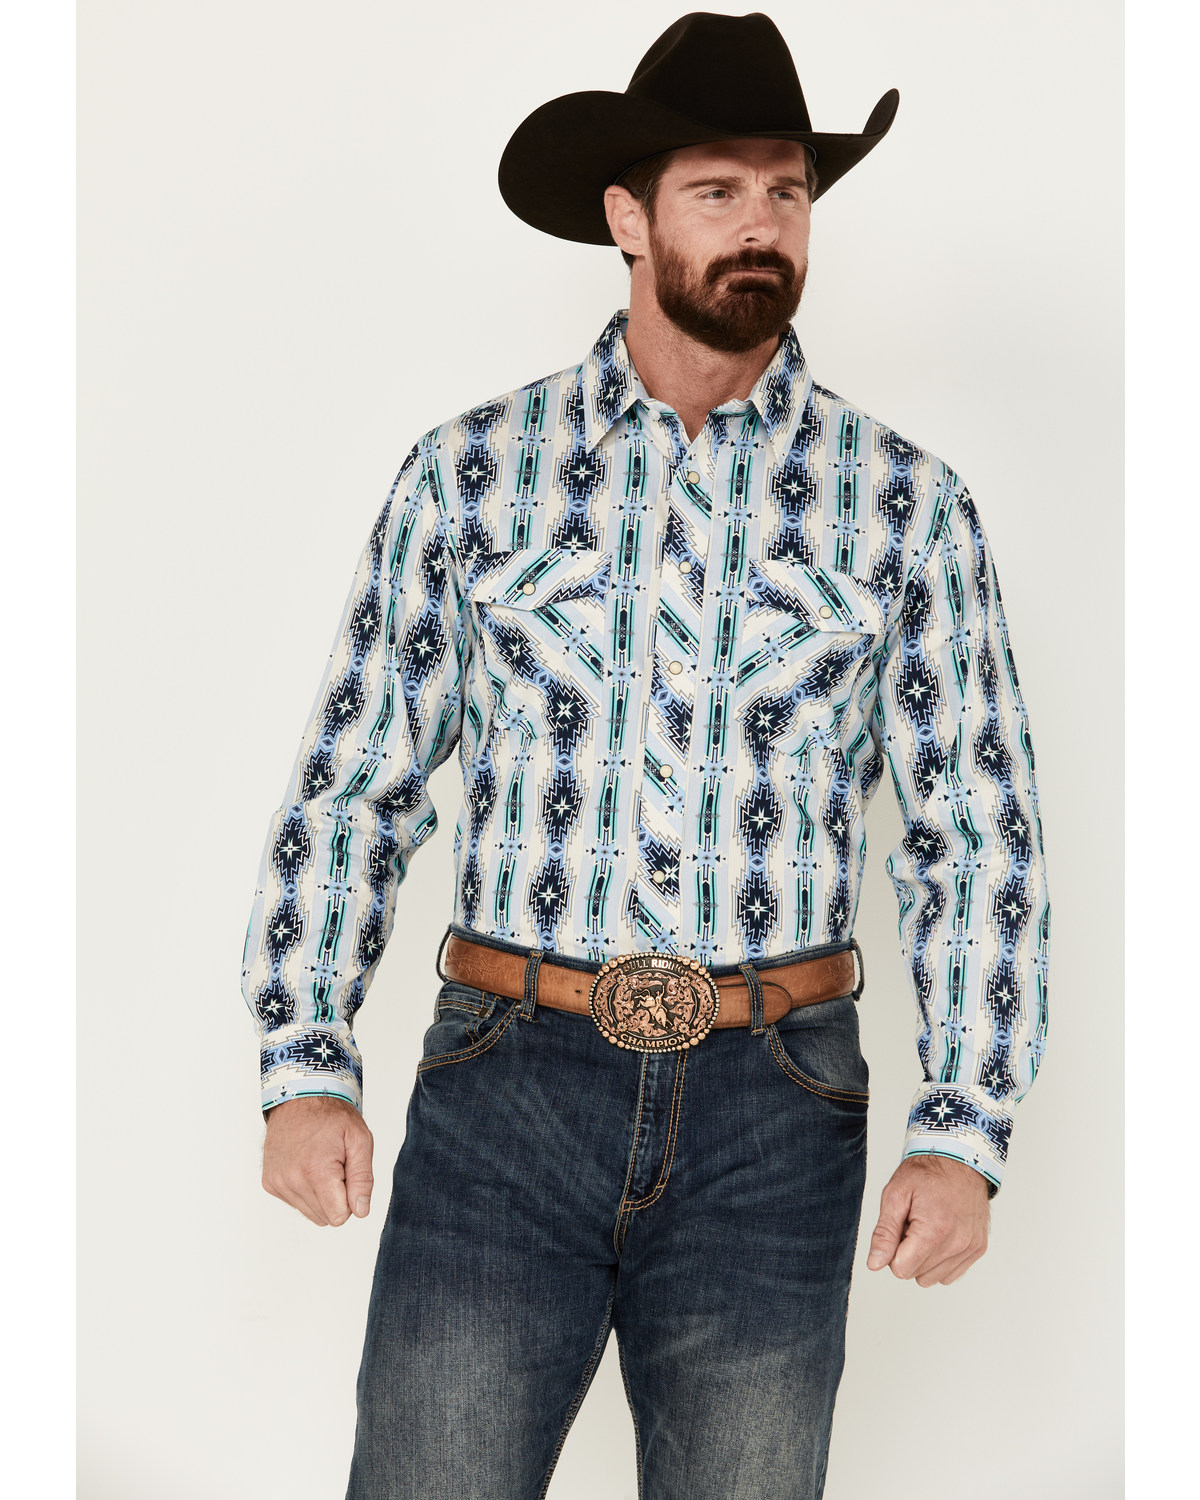 Panhandle Men's Southwestern Print Long Sleeve Pearl Snap Western Shirt